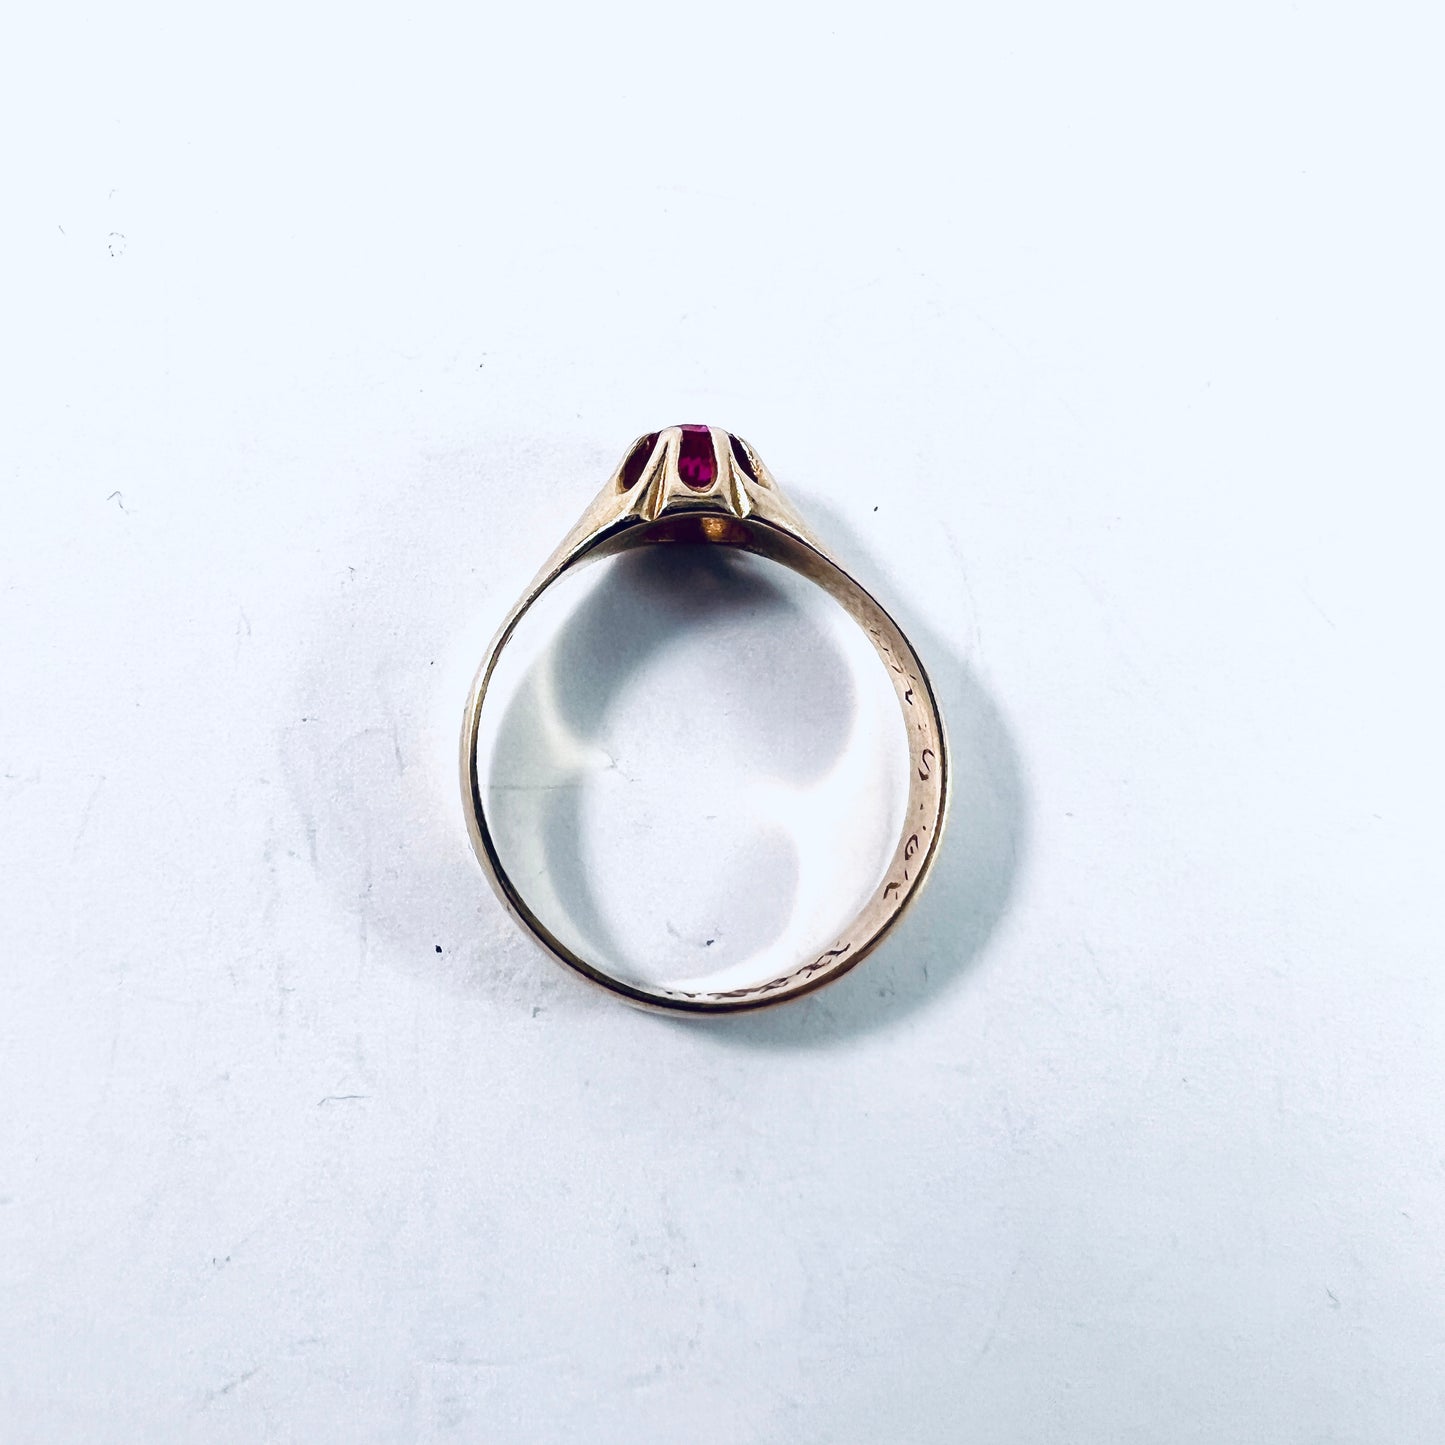 Michael Mindort, Denmark 1943 (War-Time). Vintage 14k Gold Synthetic Sapphire Ring.